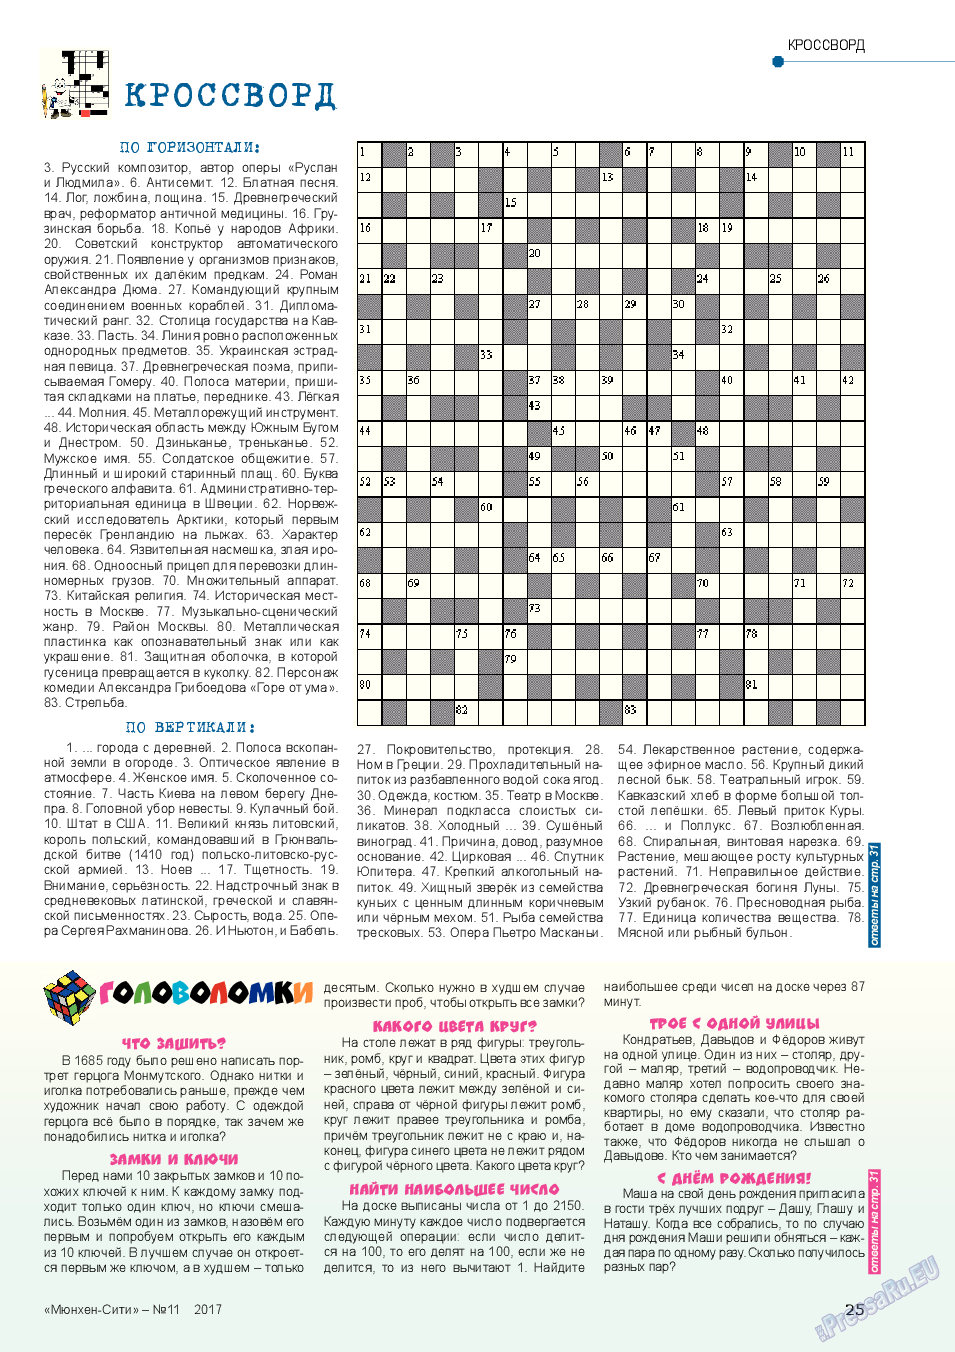 Мюнхен-сити, журнал. 2017 №11 стр.25